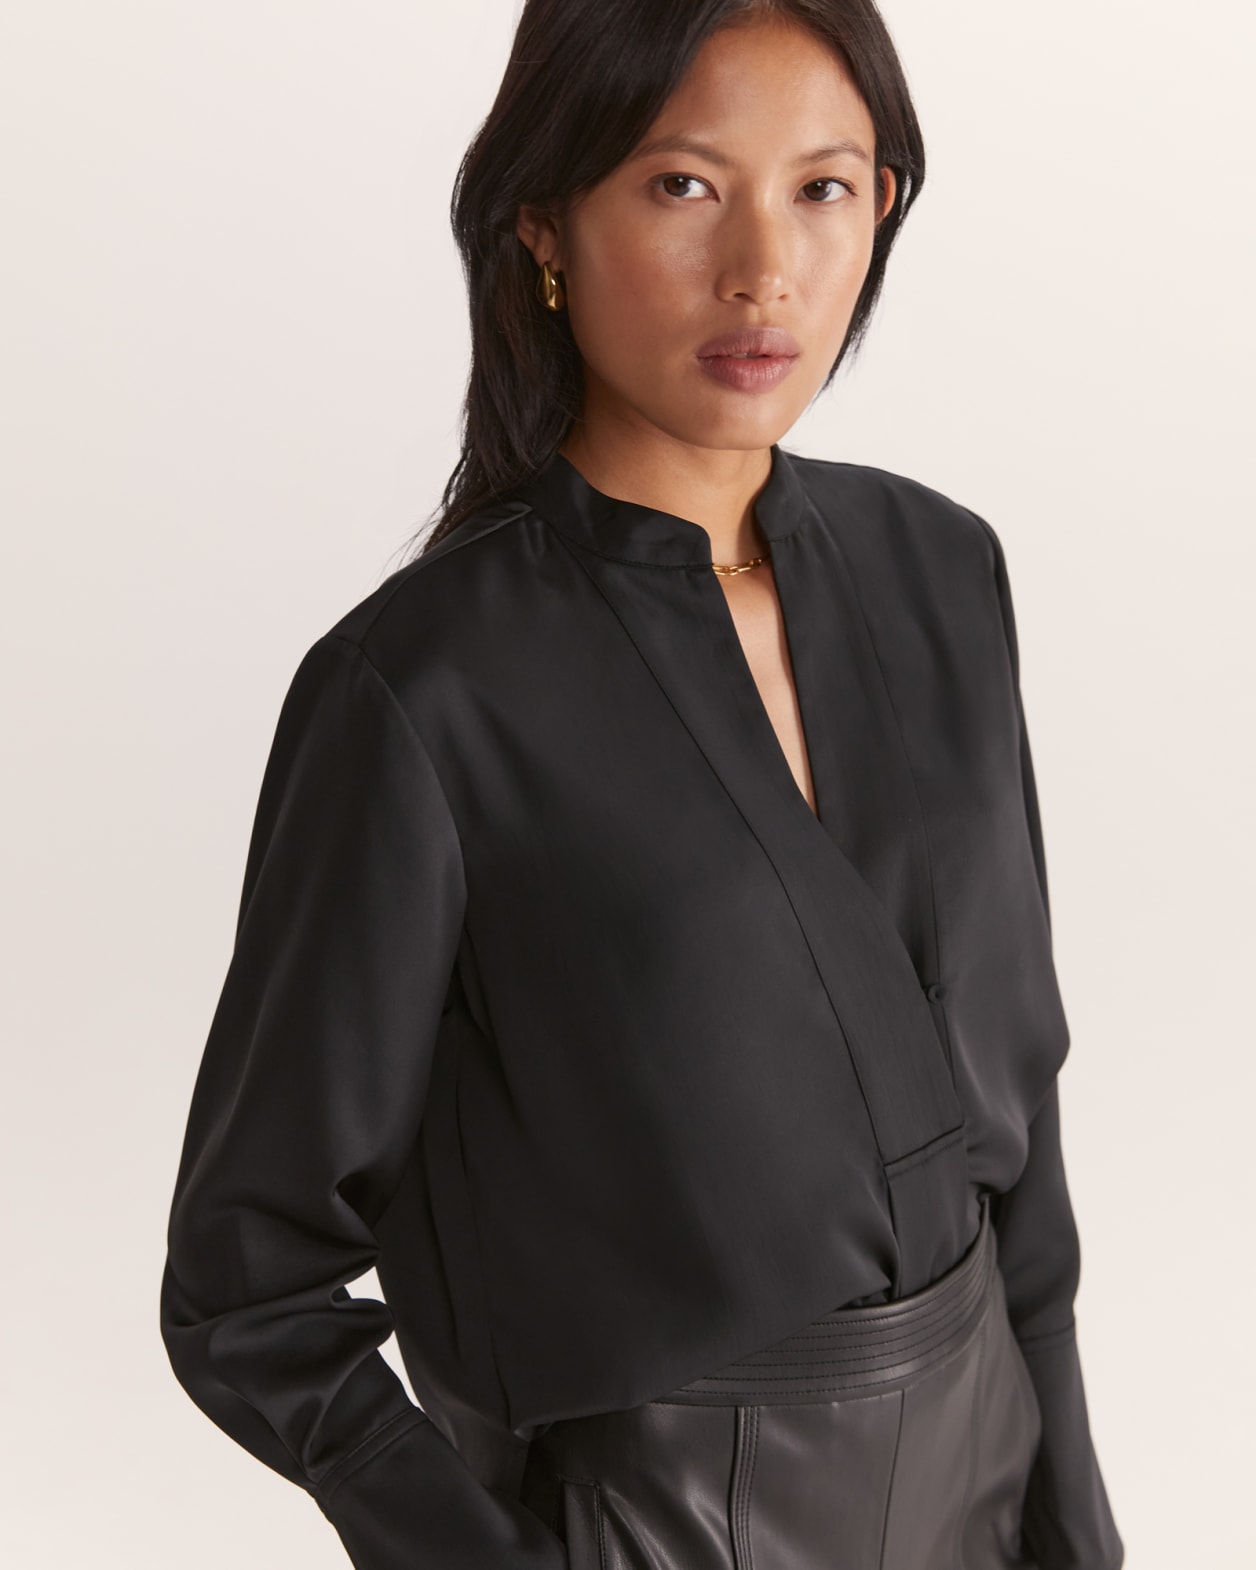 Kaia Long Sleeve Top in BLACK